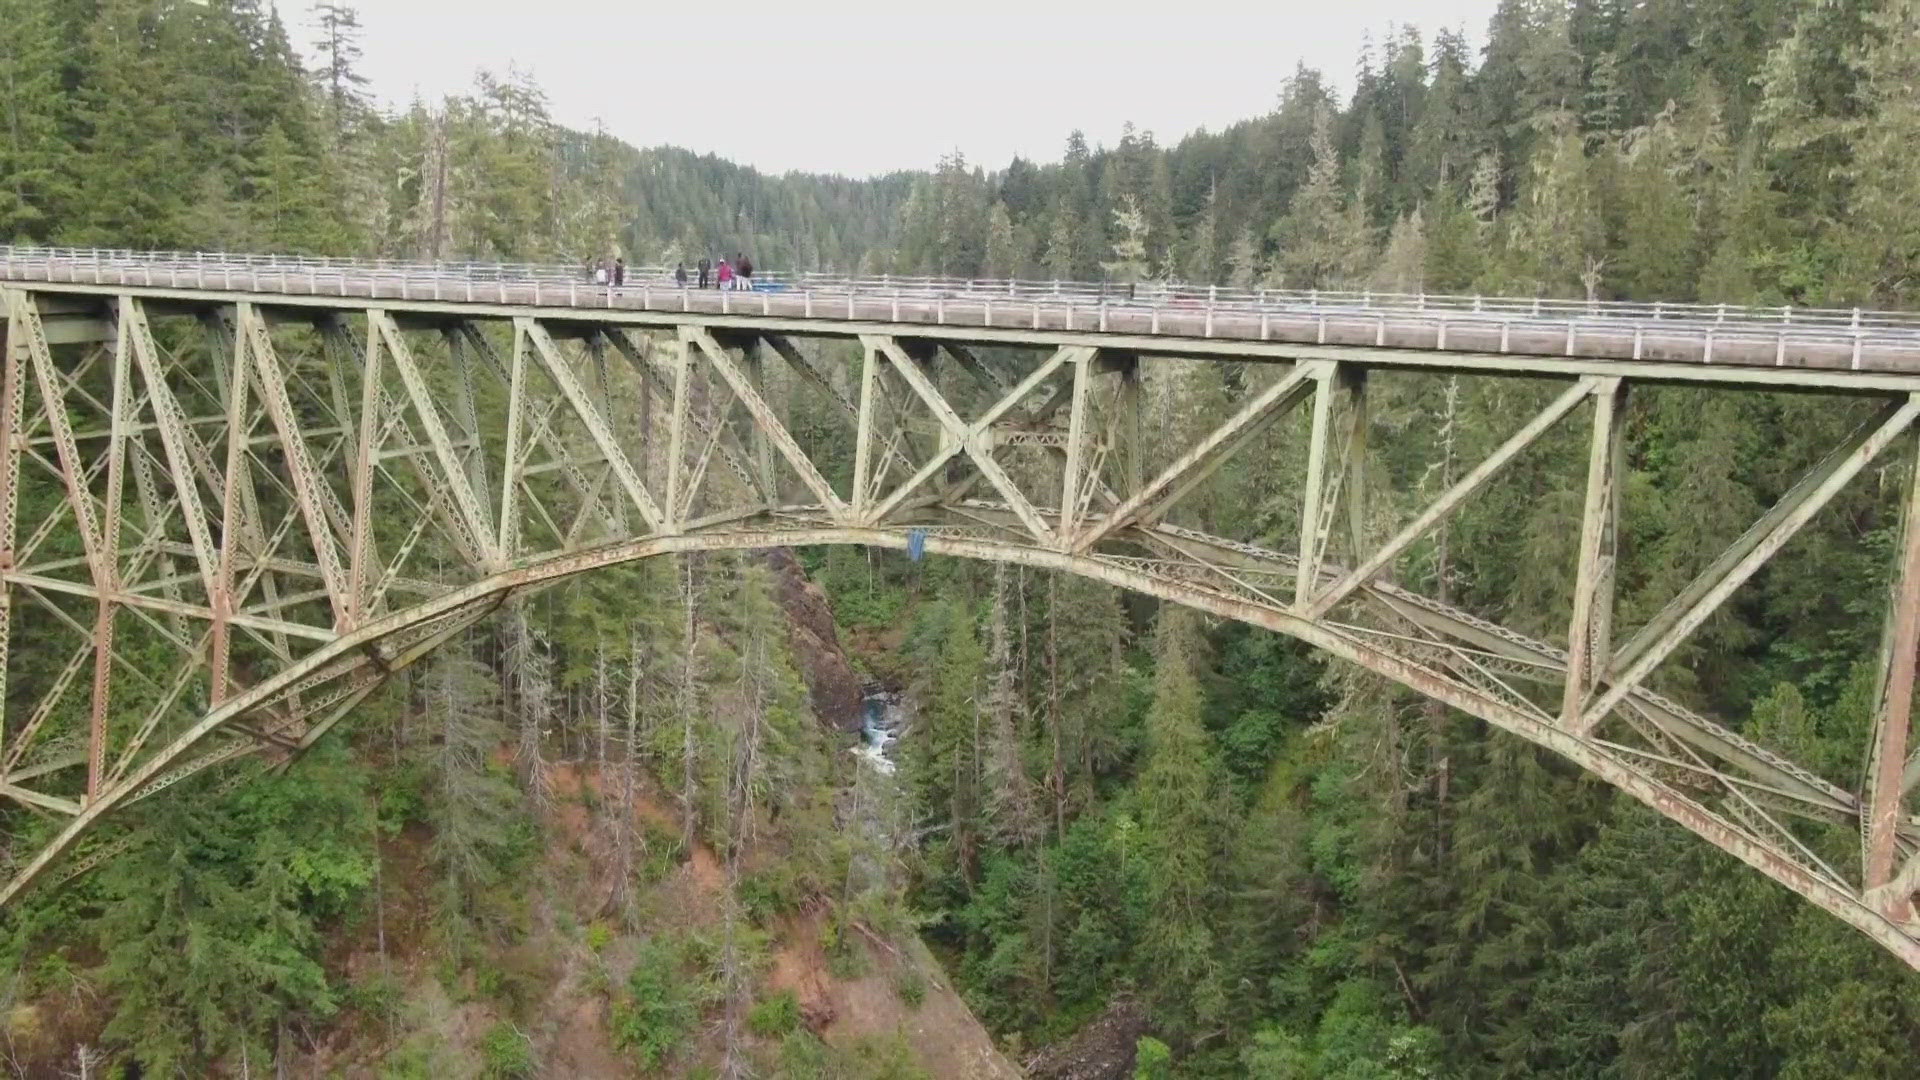 A 19-year-old man survived falling 400 feet on some steep terrain under Mason County's High Steel Bridge